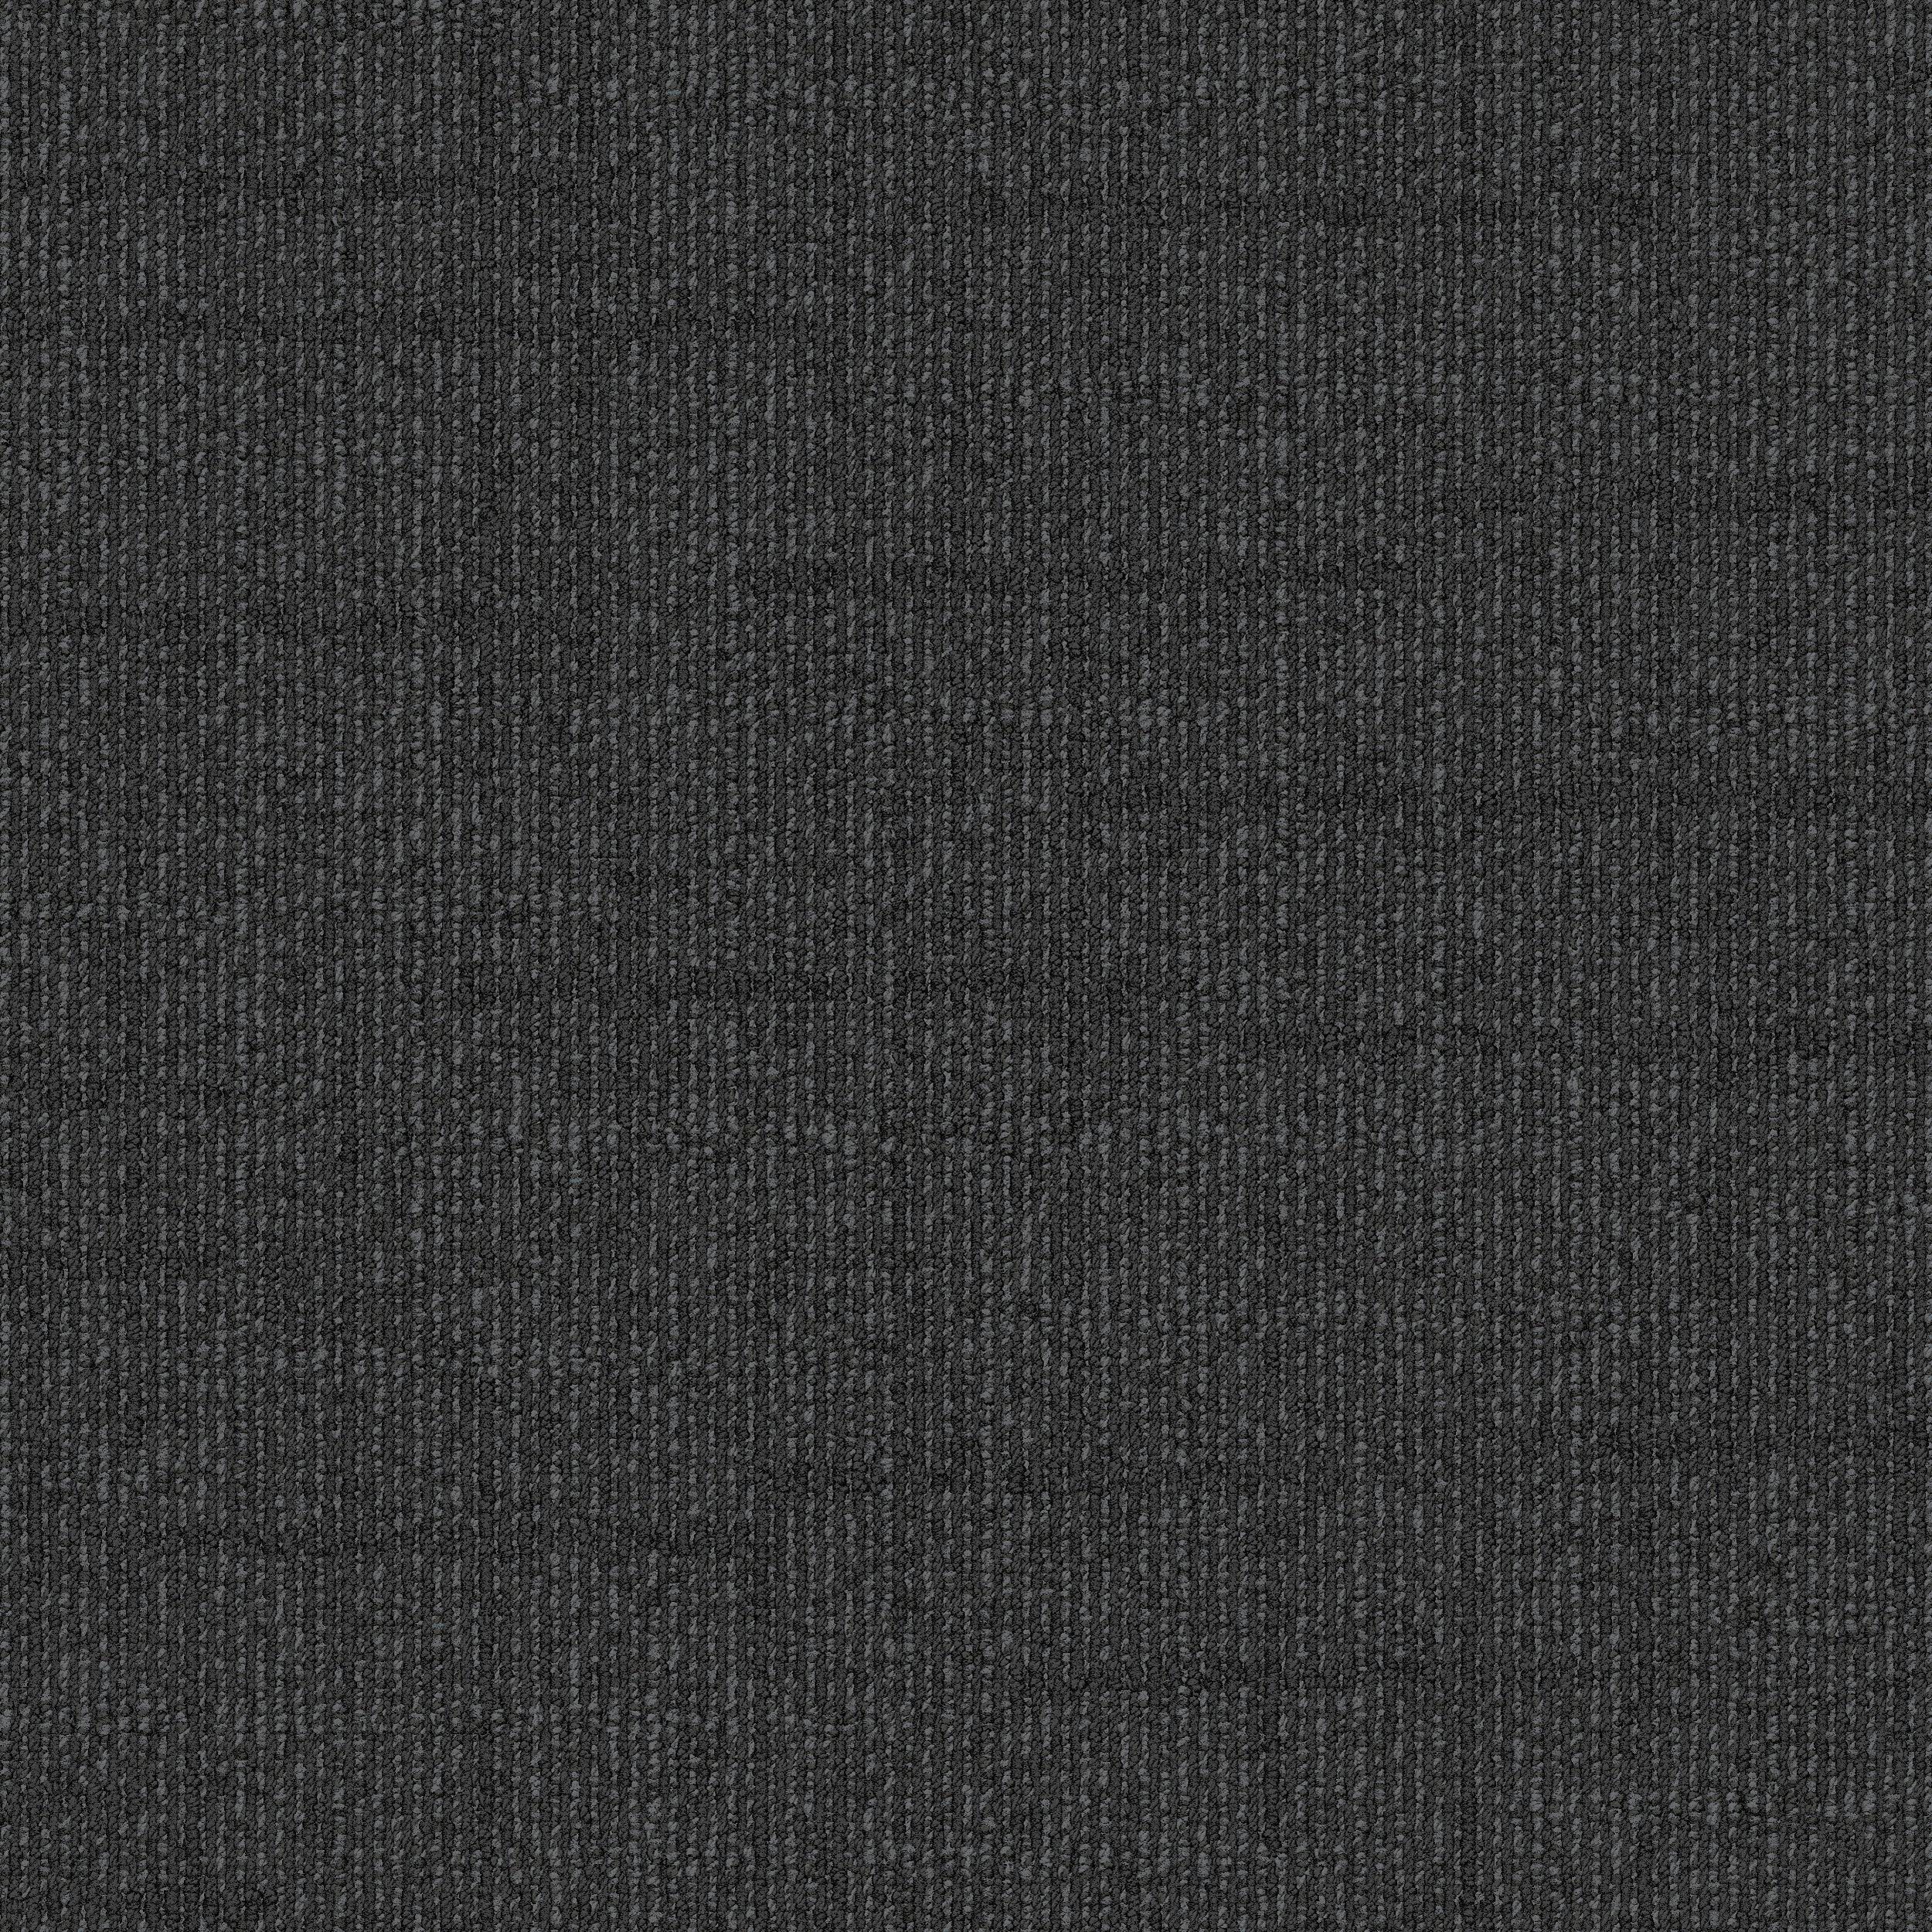 S102 Carpet Tile In Black imagen número 1